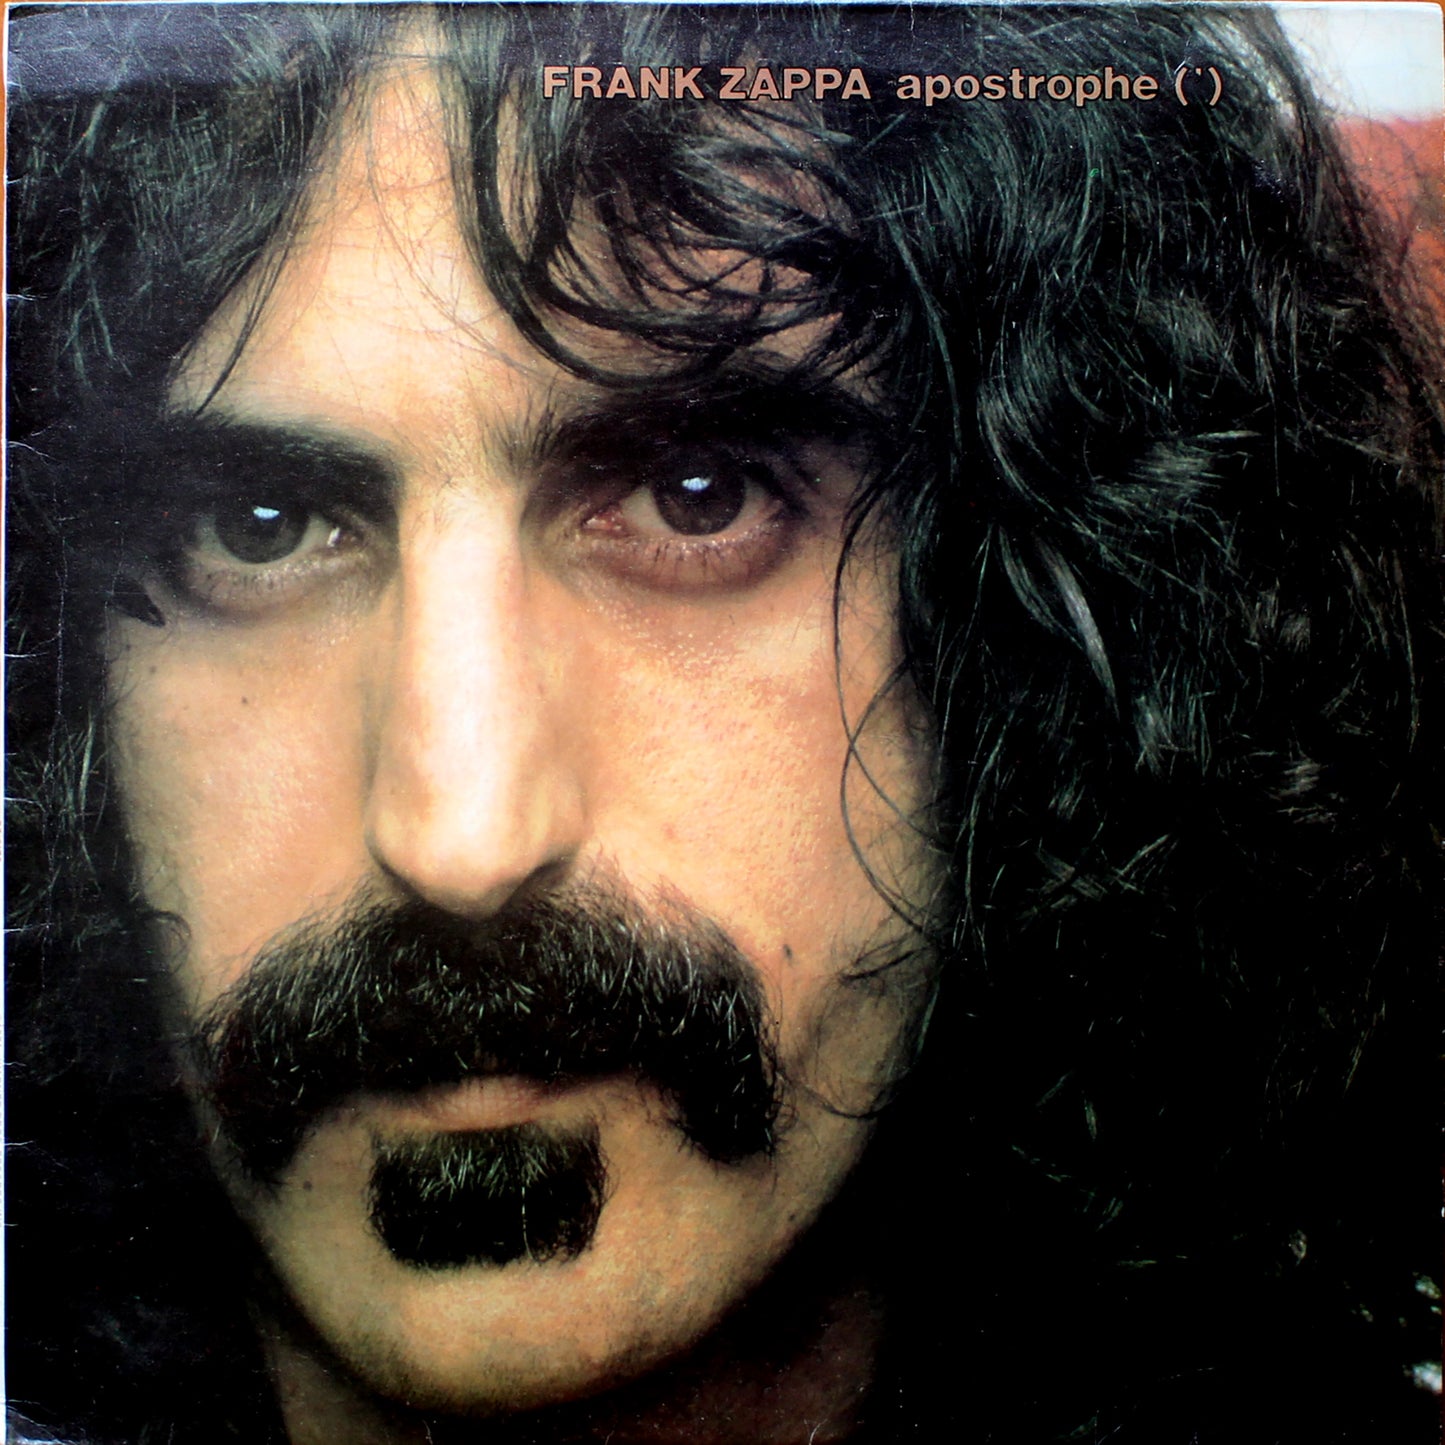 Frank Zappa - apostrophe (*)